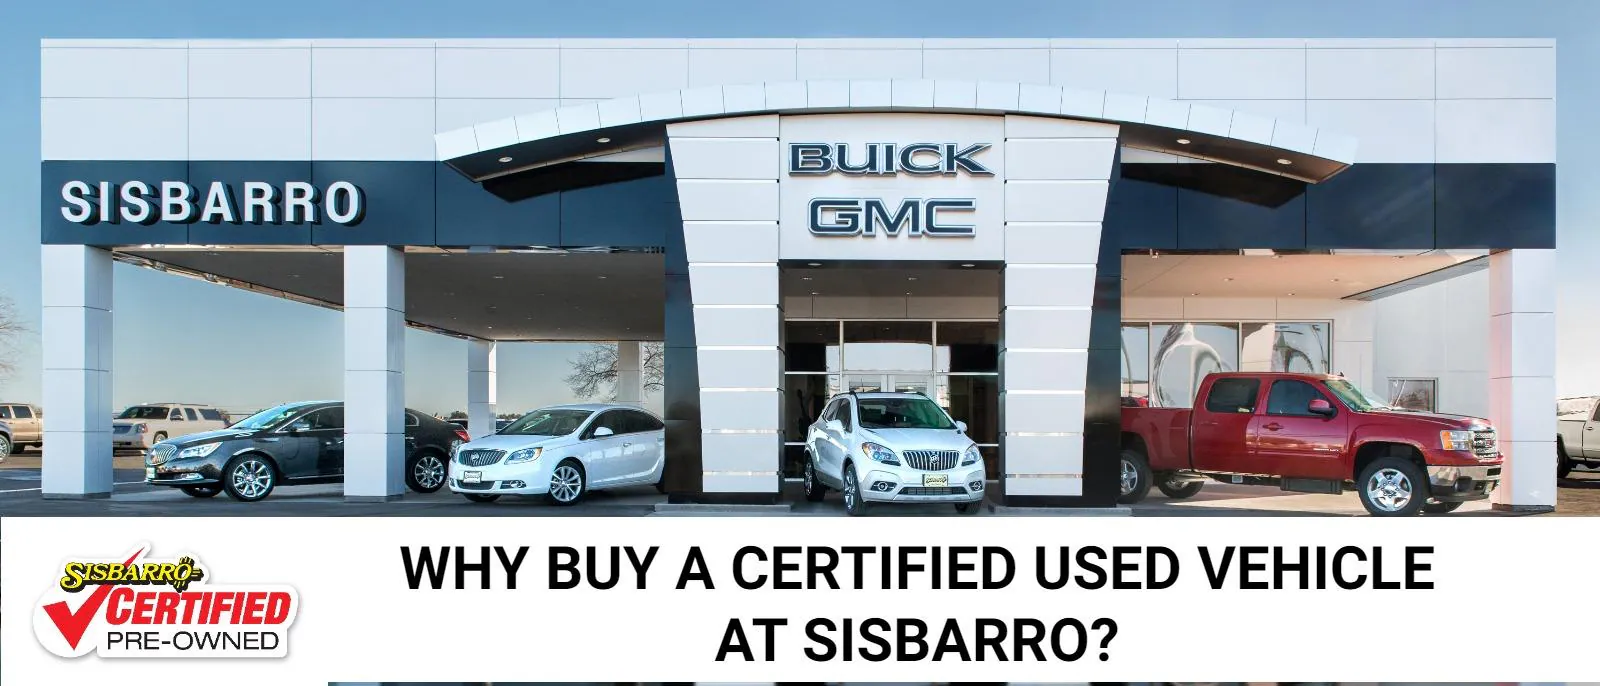 The Sisbarro Buick GMC Dealerships